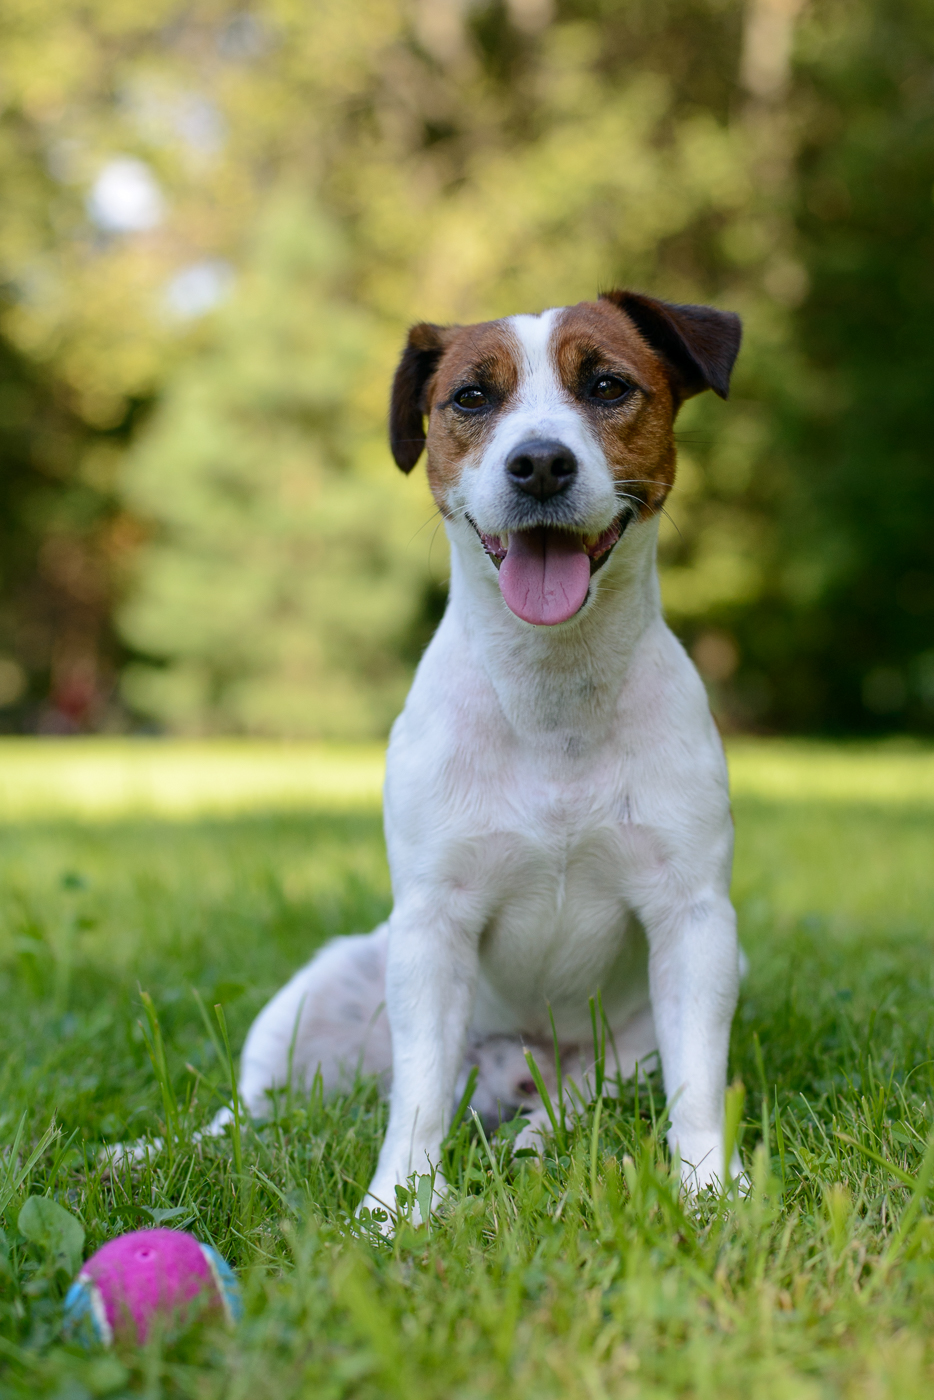 Jack Russell dog terrier portrait